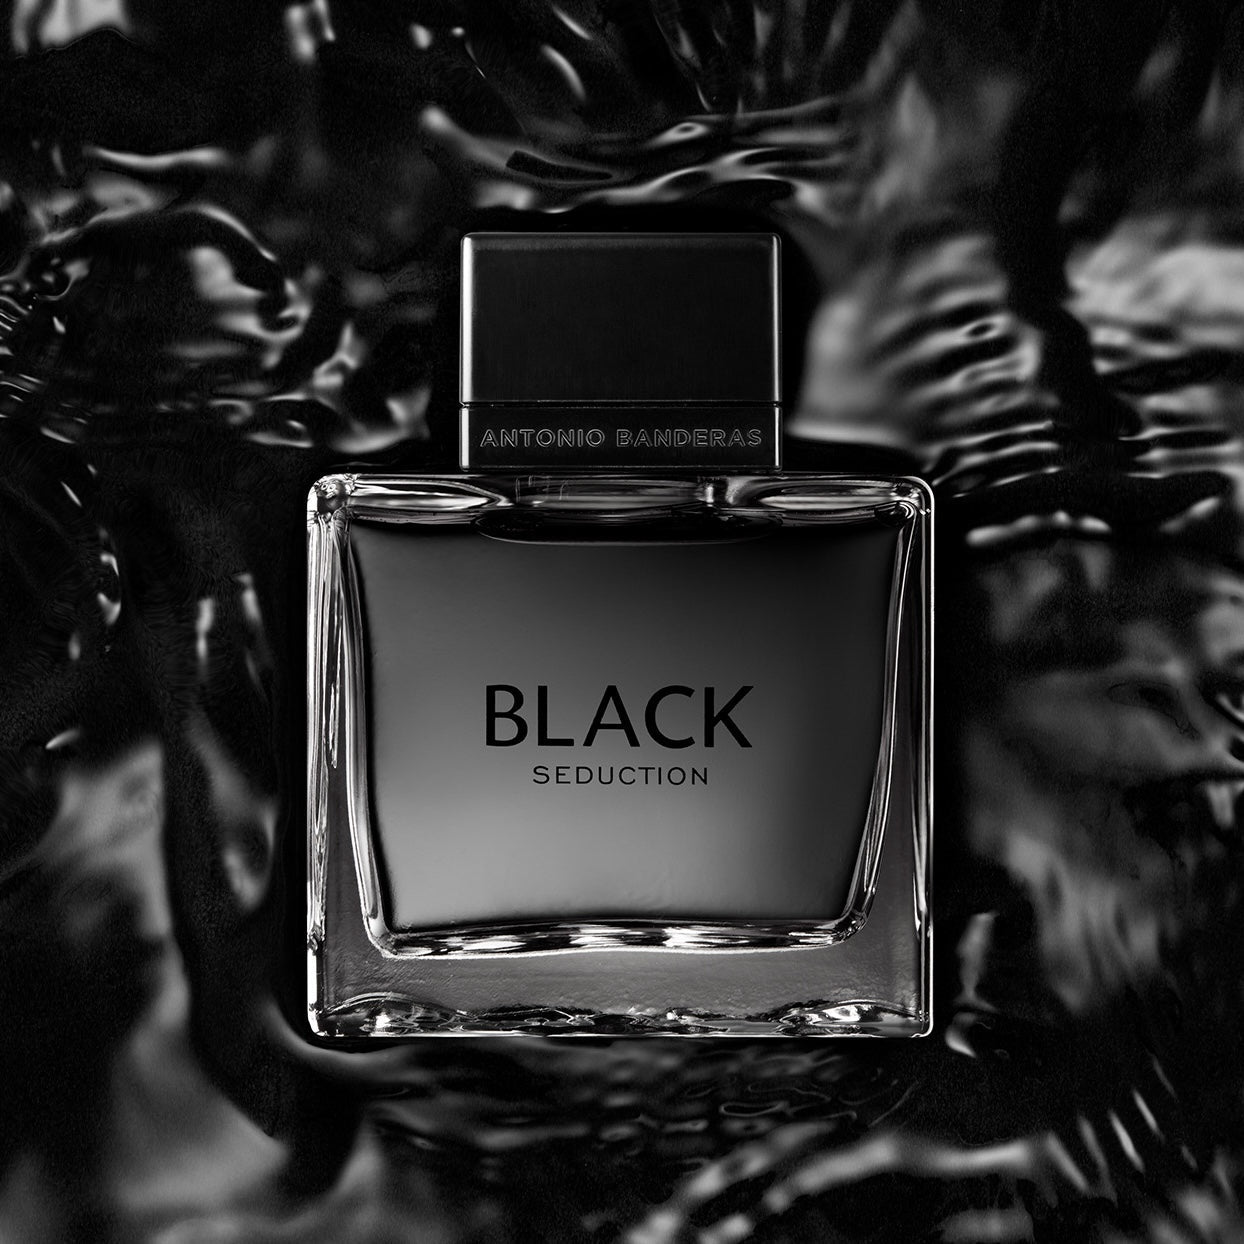 Antonio Banderas Black Seduction EDT For Men | My Perfume Shop Australia